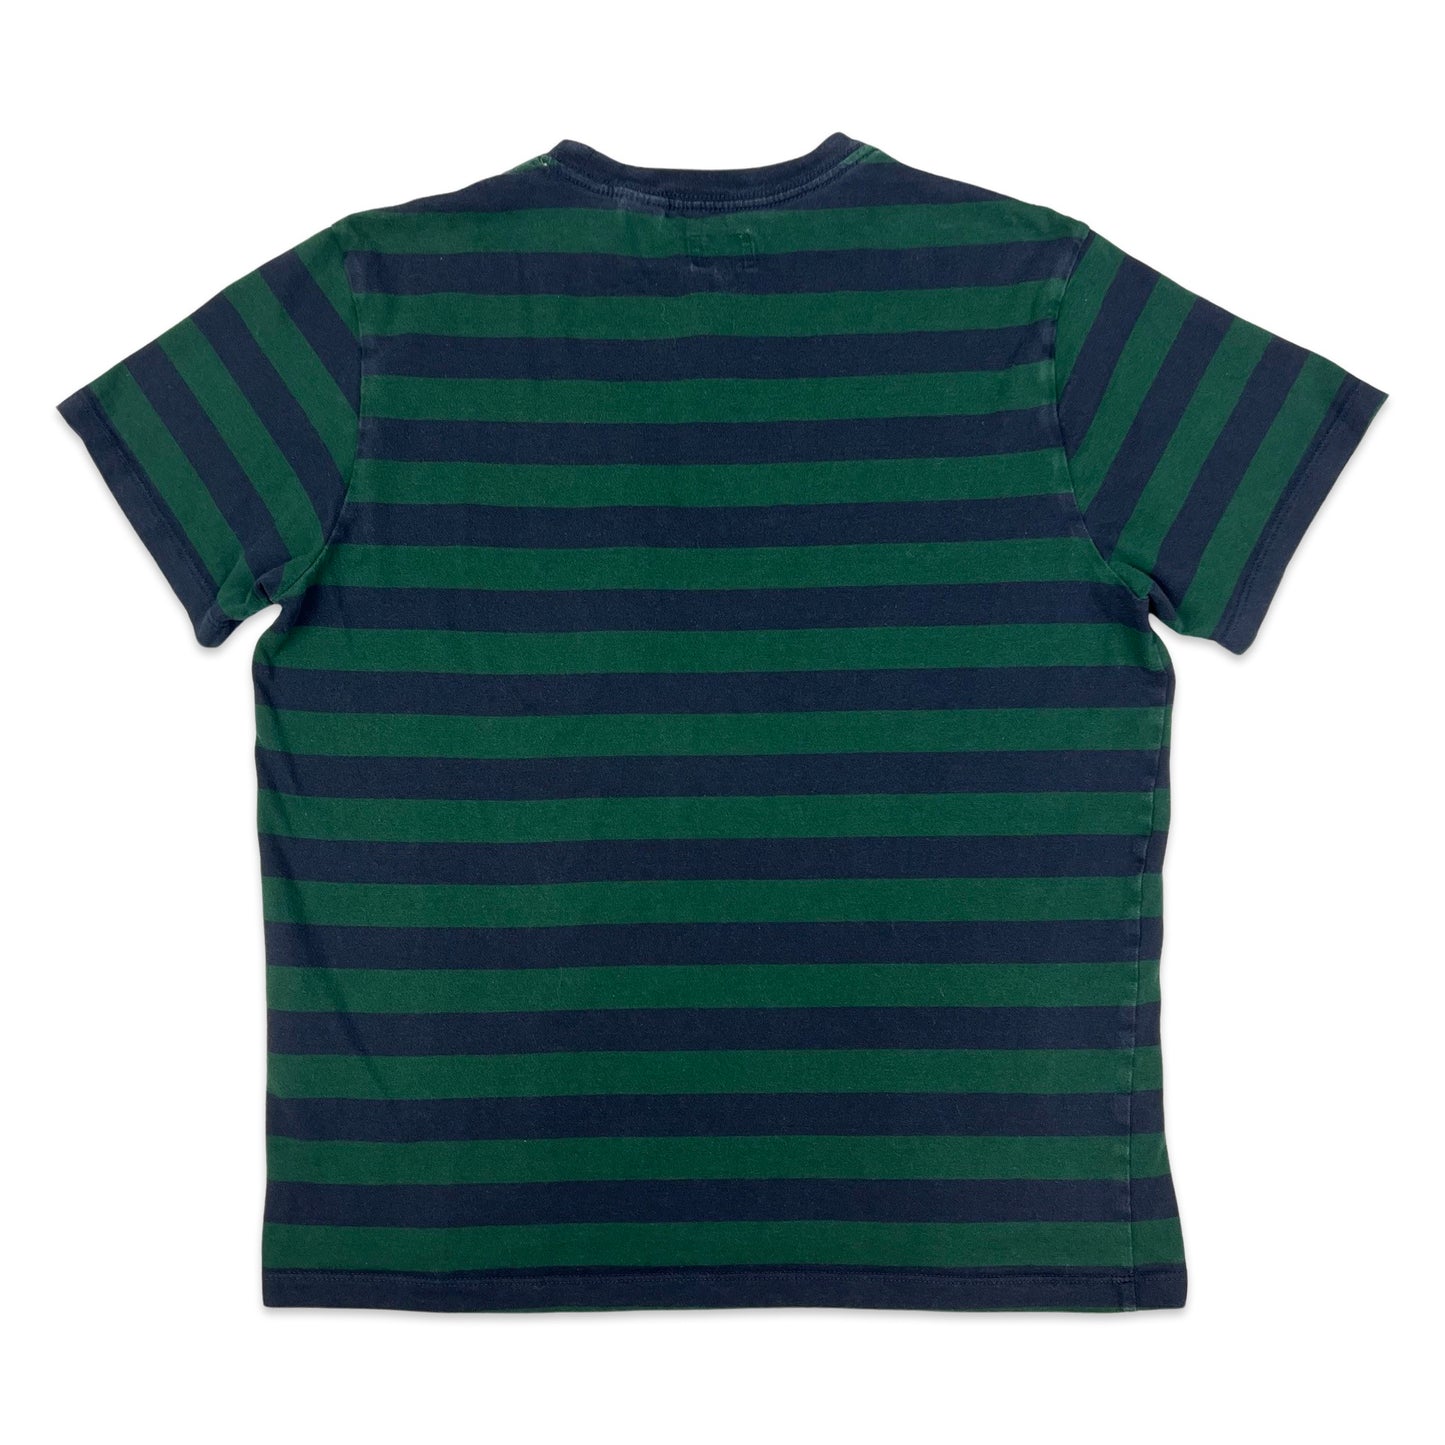 Levi's Green & Navy Striped Pocket Tee S M